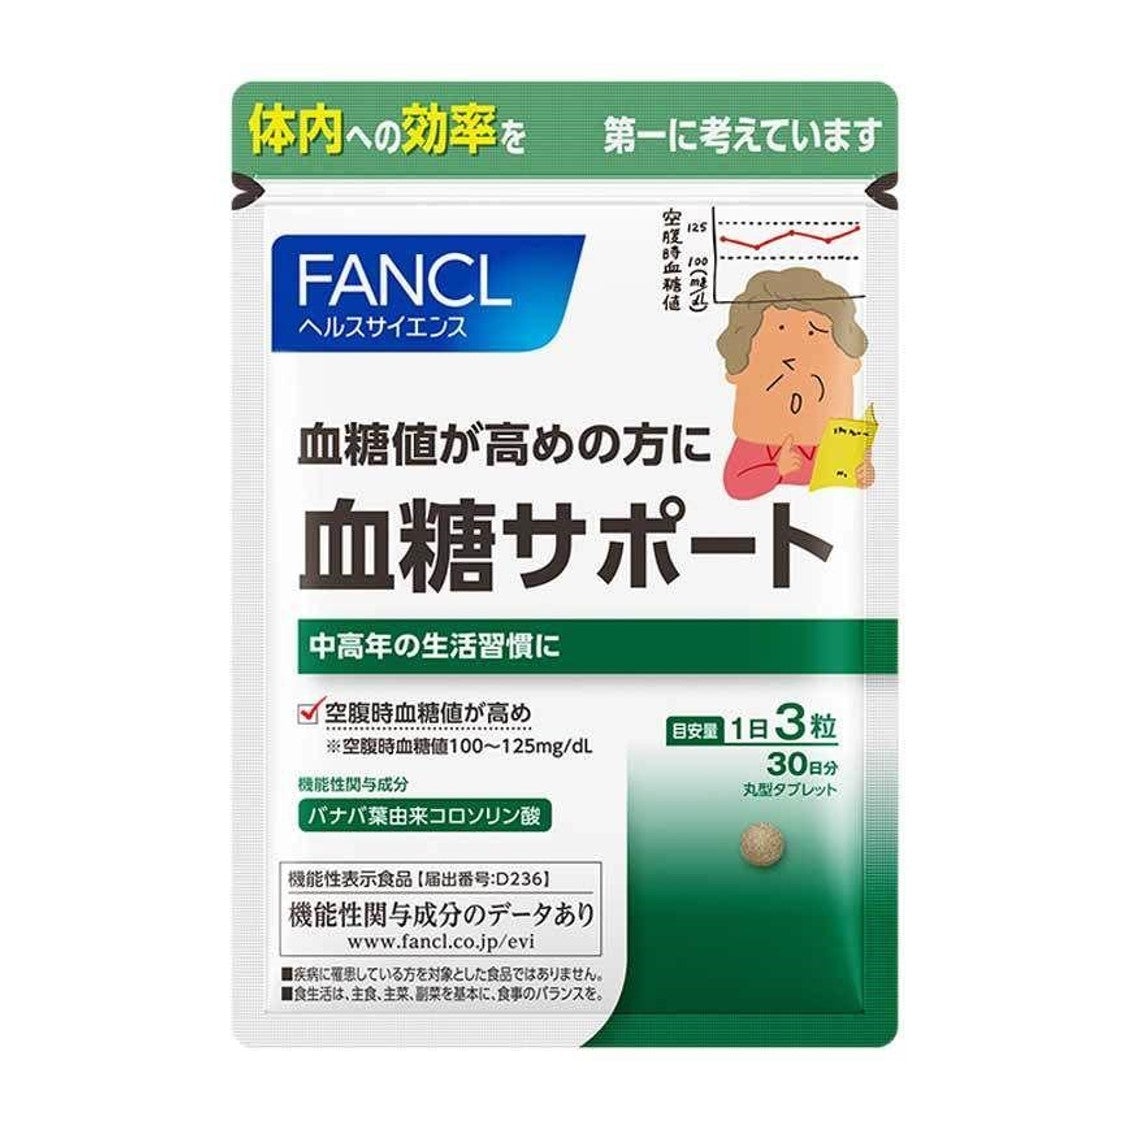 fancl-glucose-fit-nutrients